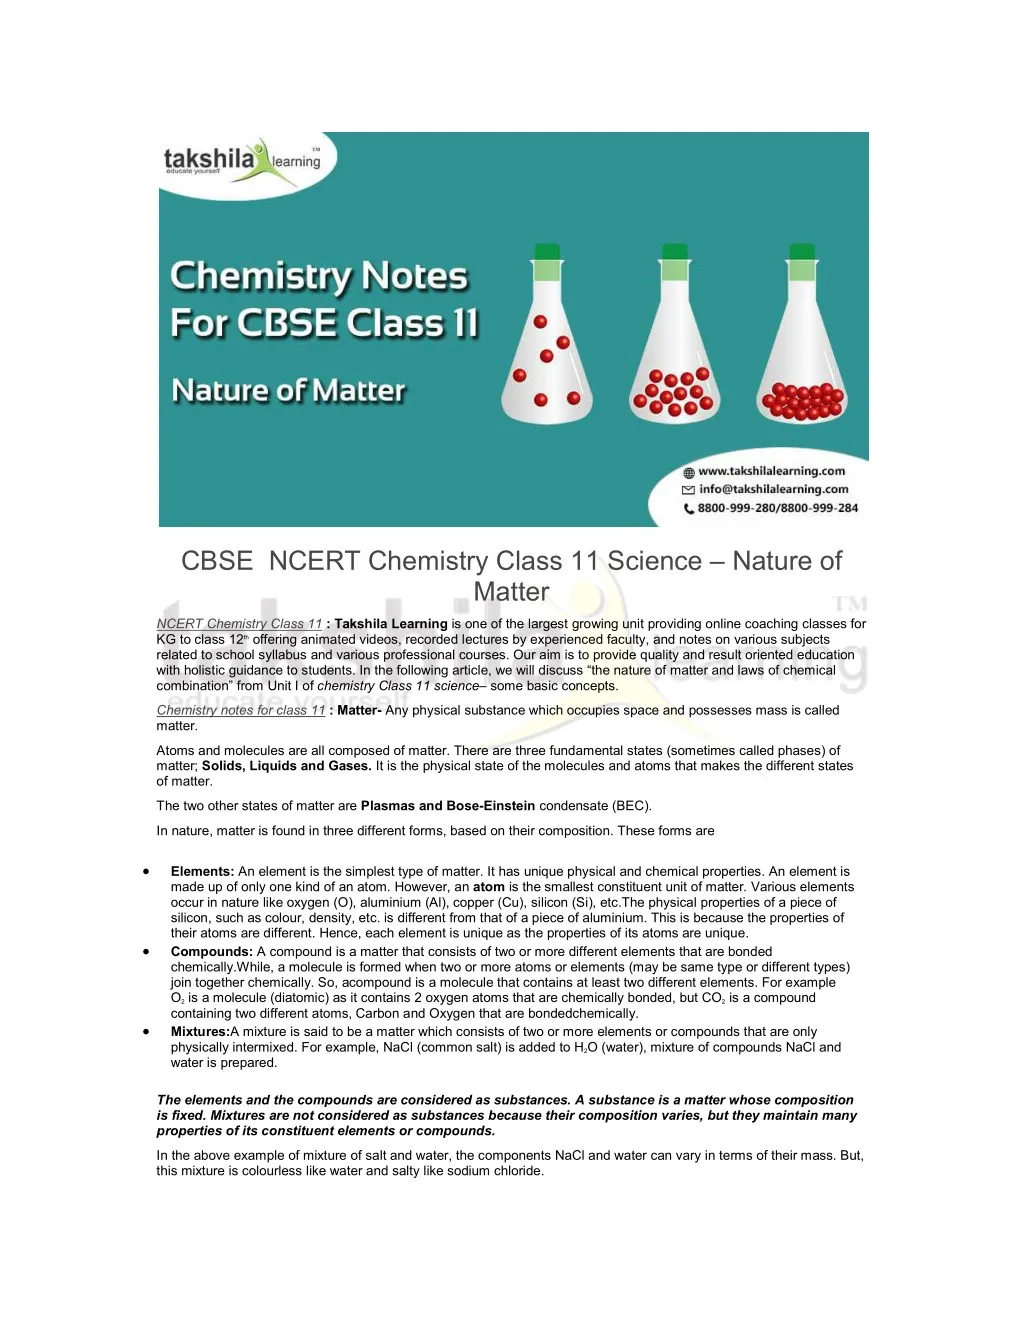 cbse ncert chemistry class 11 science nature